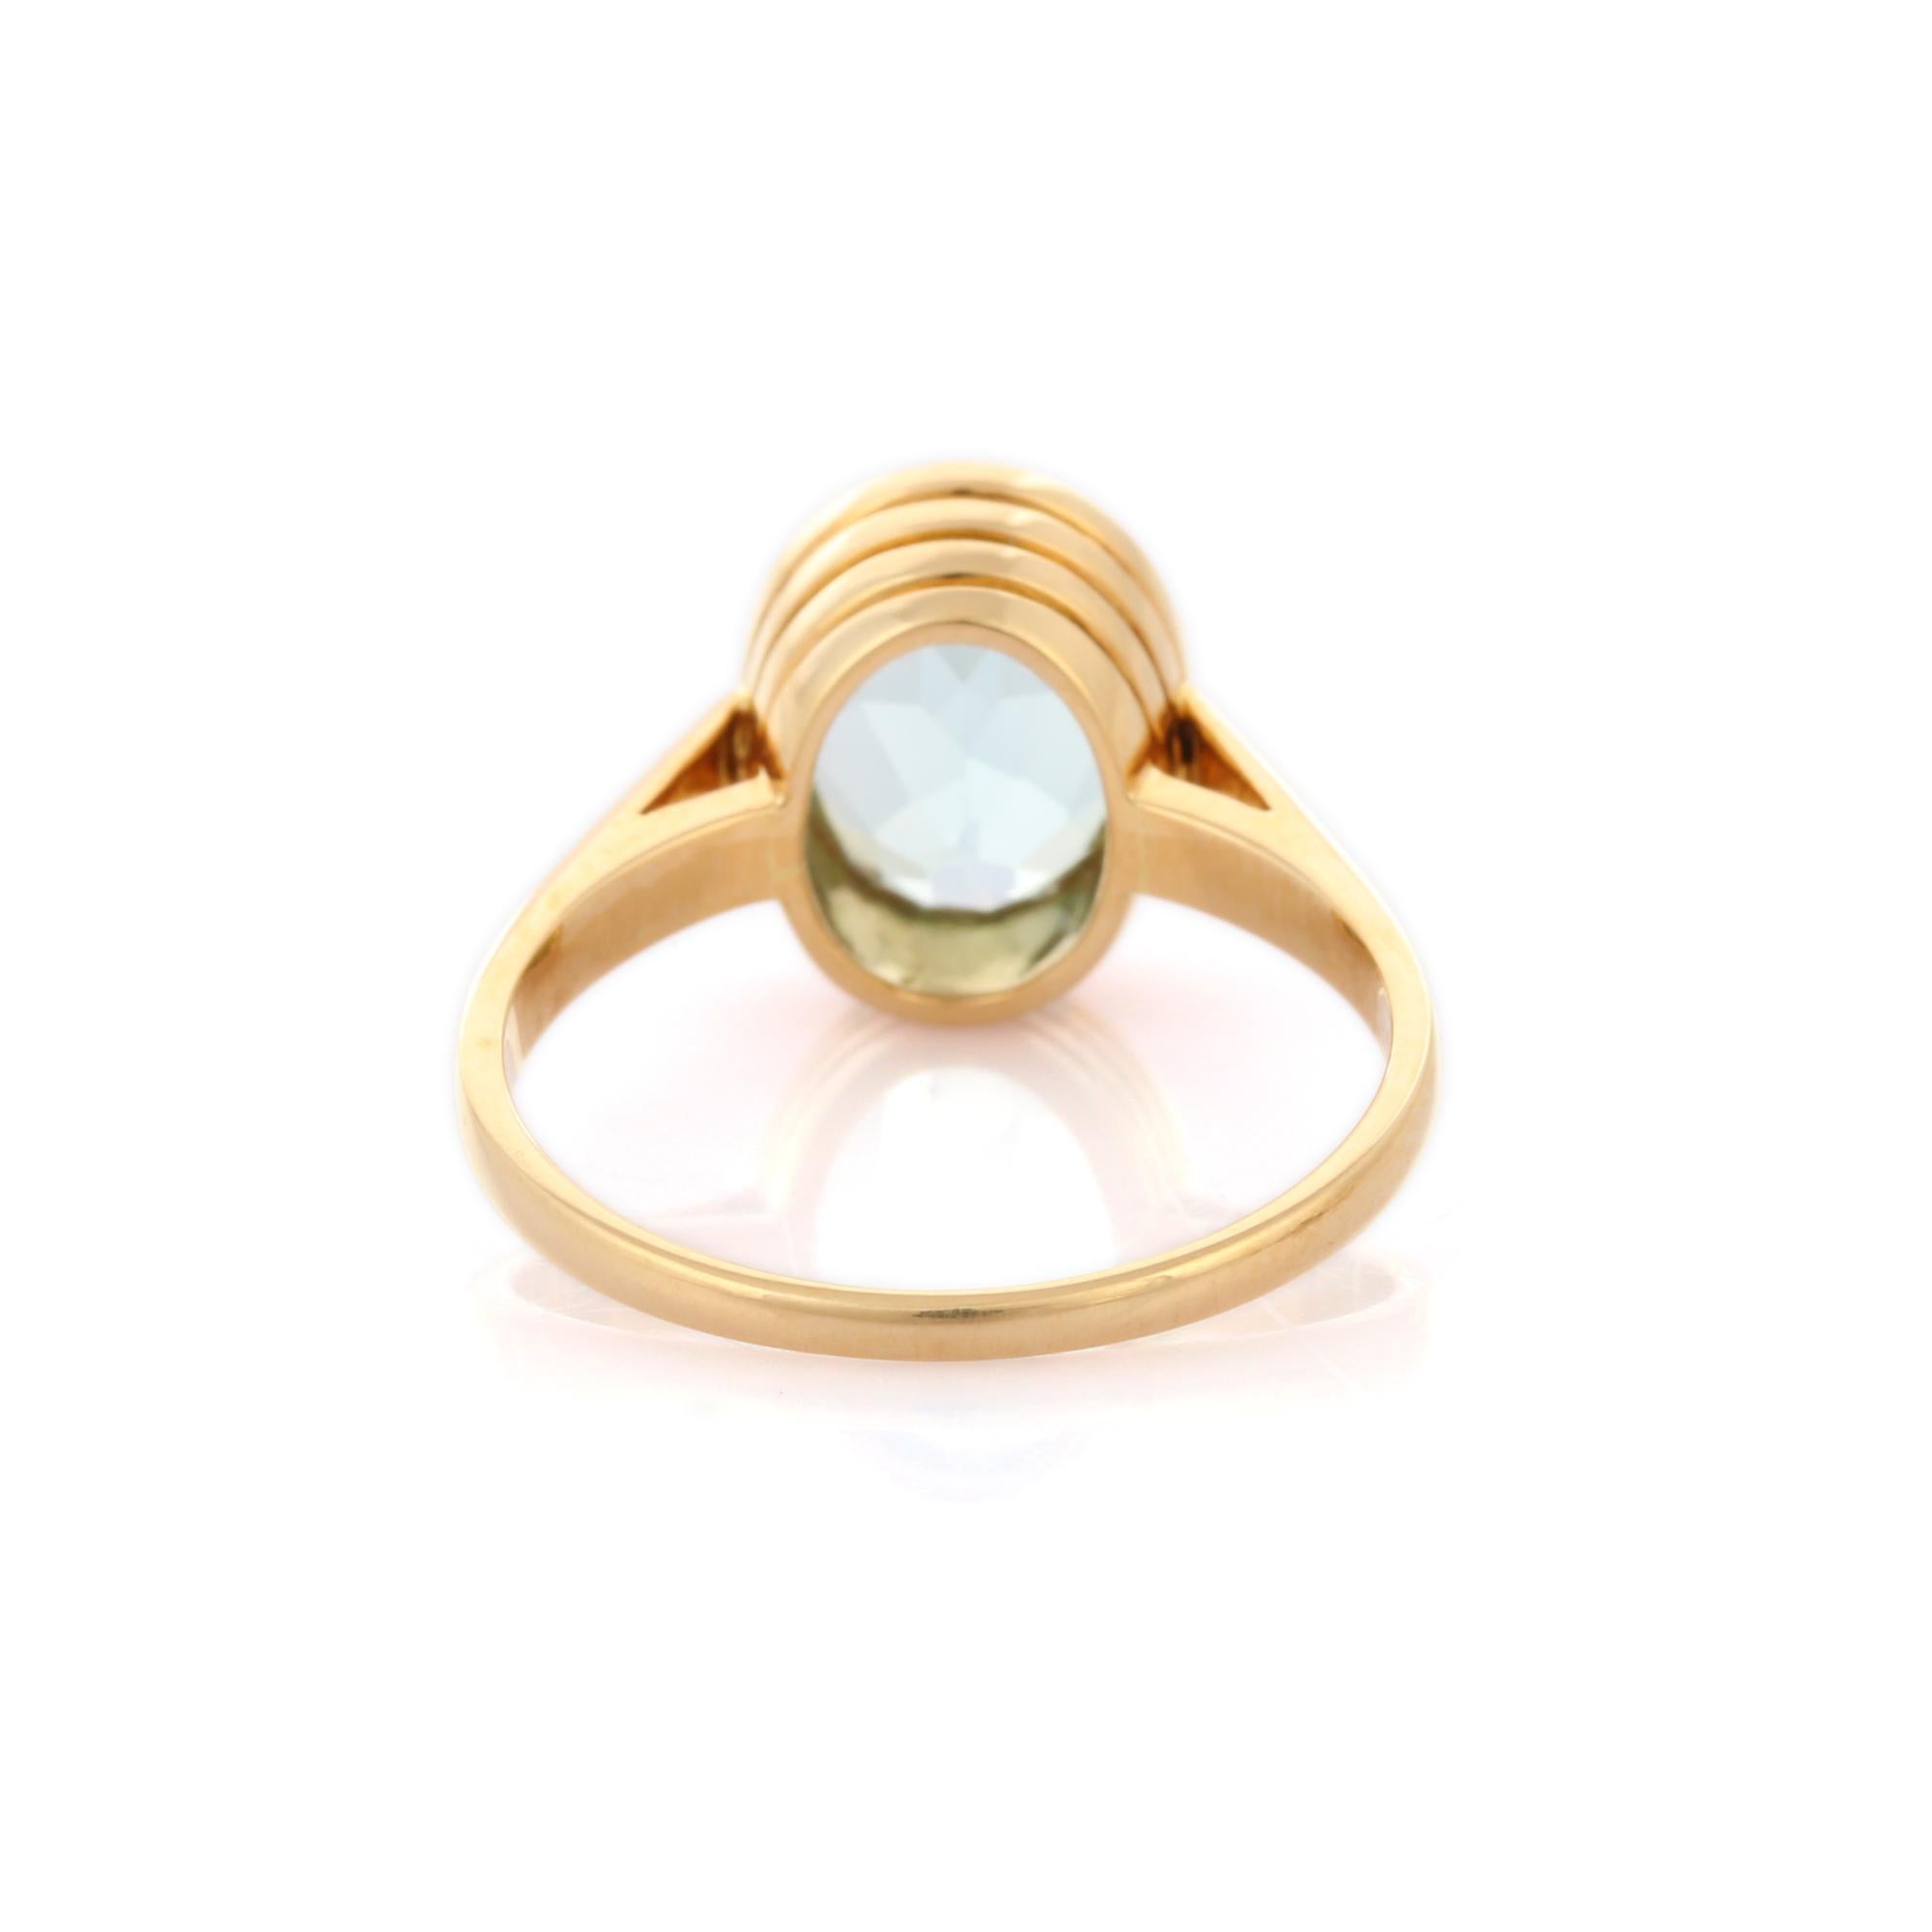 For Sale:  18K Solid Yellow Gold 2.55 ct Oval Cut Aquamarine Gemstone Ring, Aquamarine Ring 5